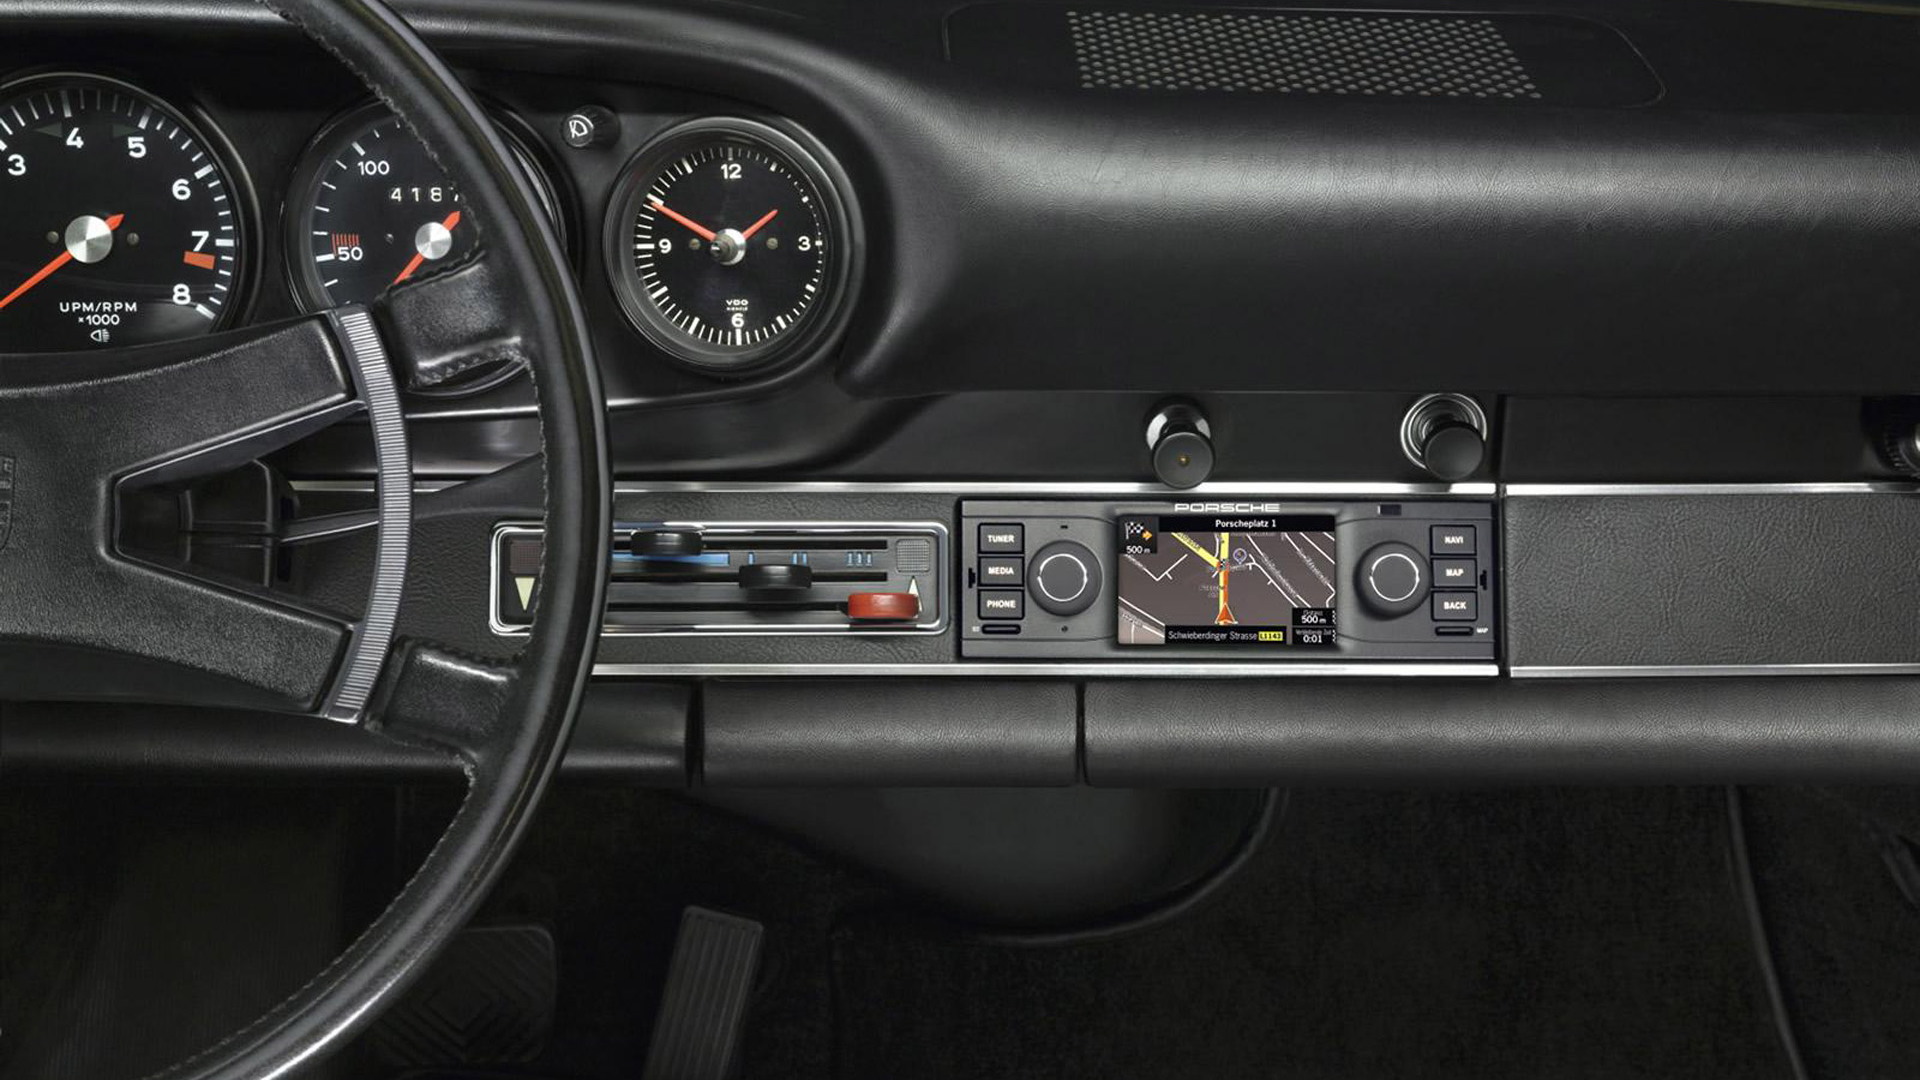 Retrofit GPS and radio unit for classic Porsche 911s